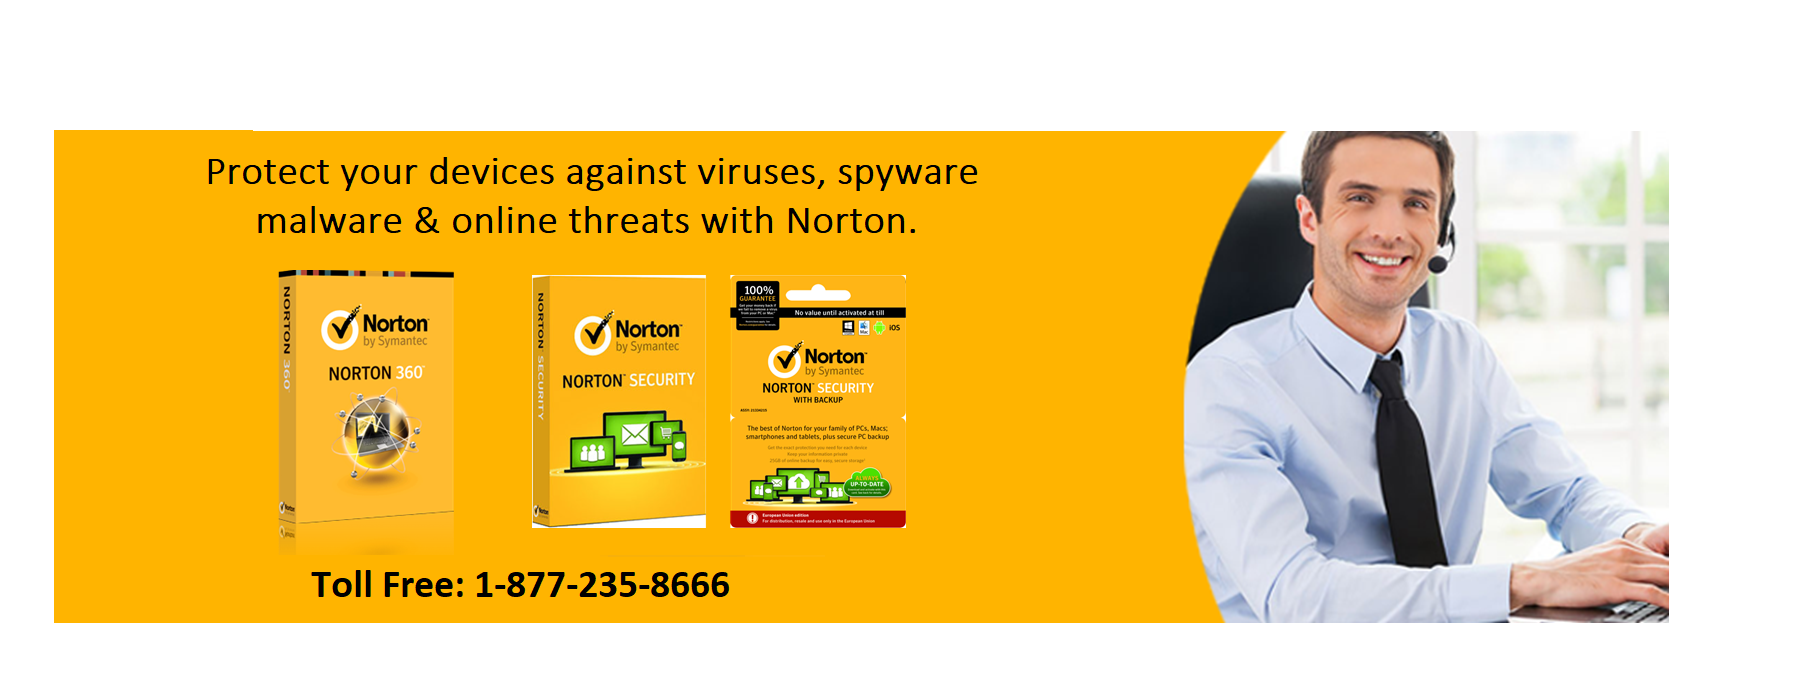 Transfer norton antivirus to another computer